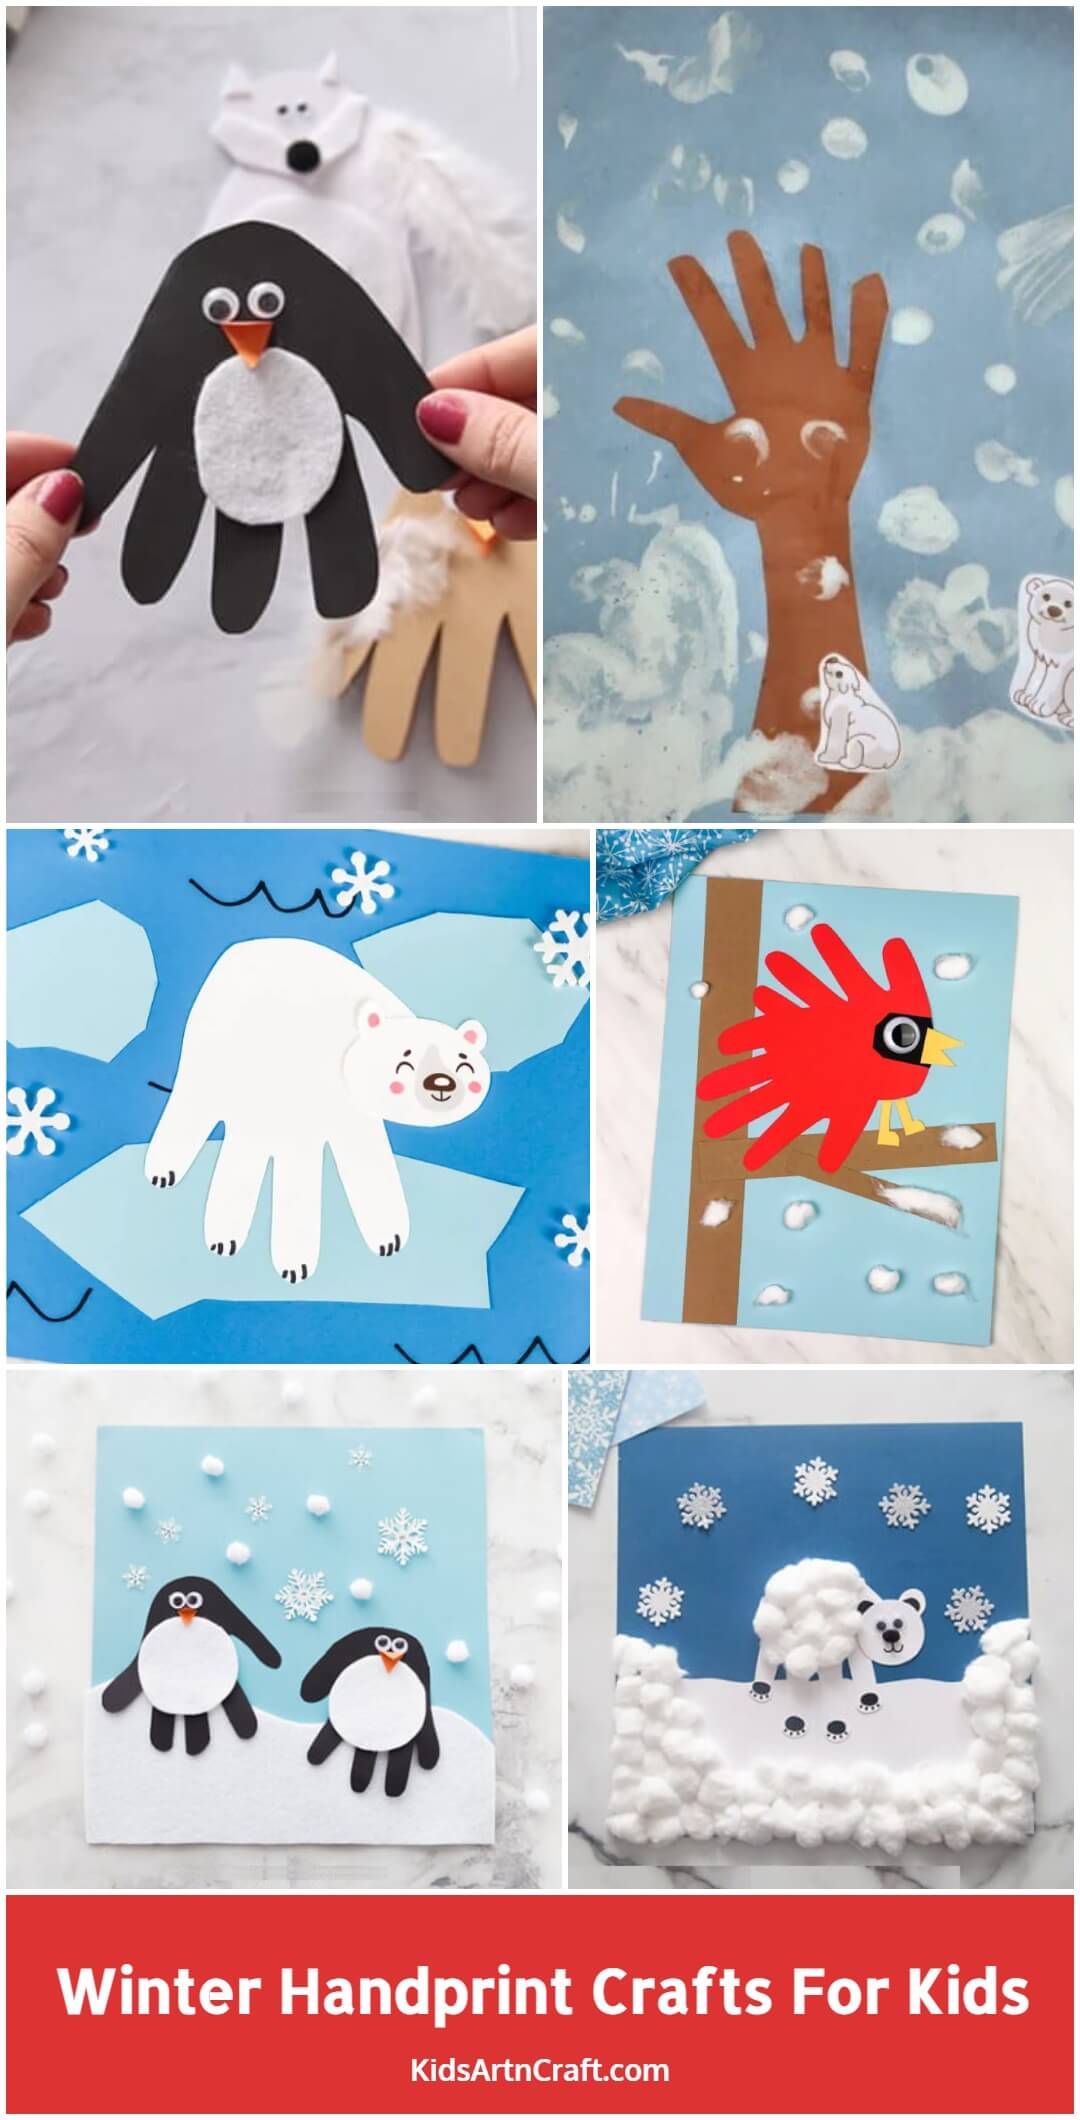 Winter Handprint Crafts For Kids